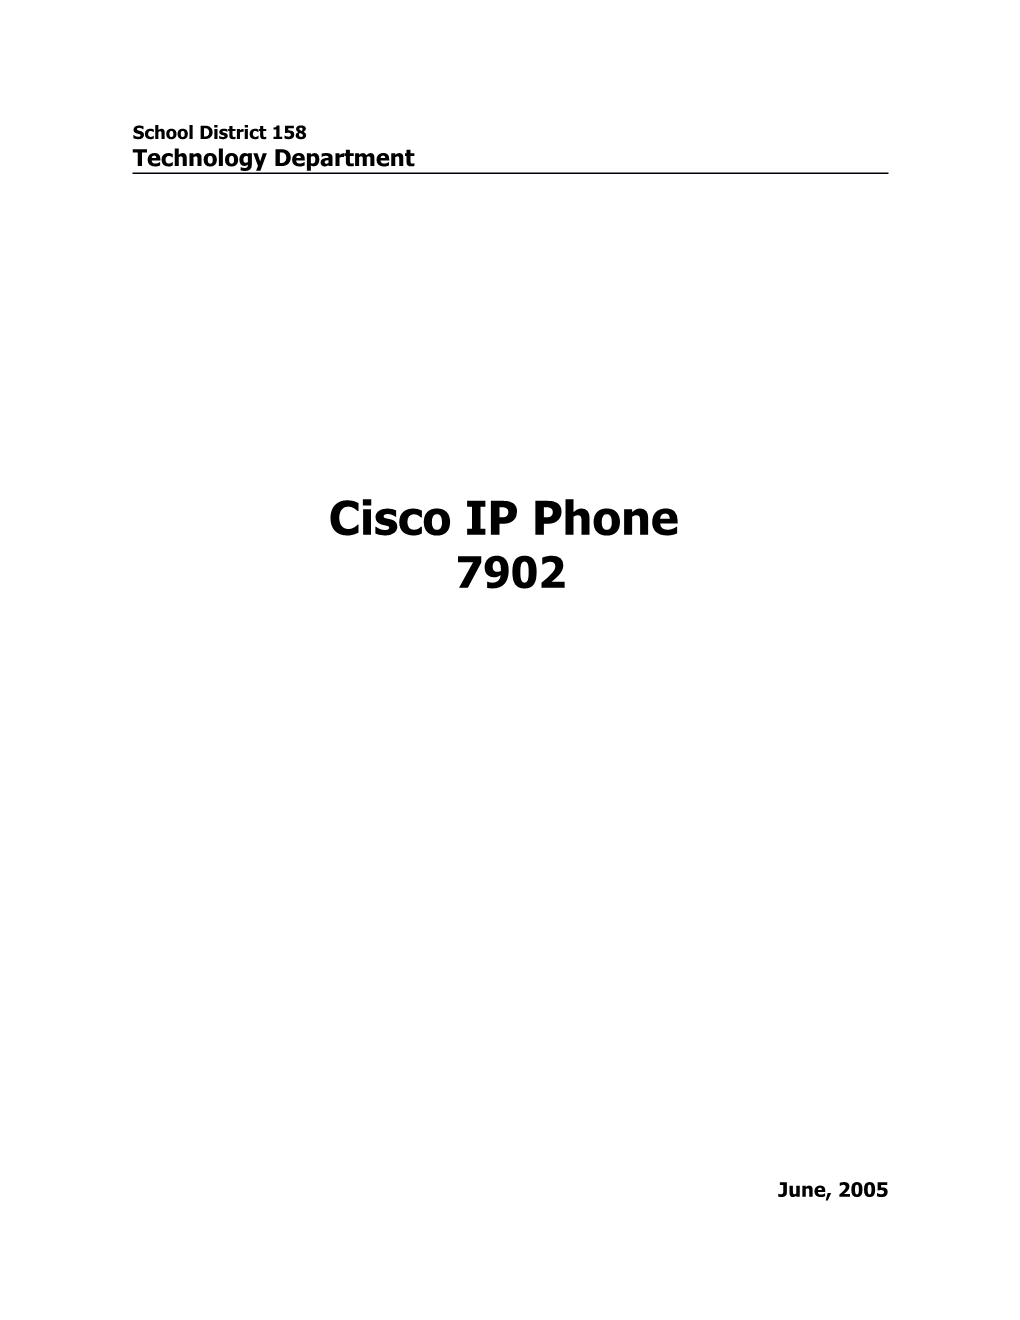 Cisco IP Phone Models 7940/7960